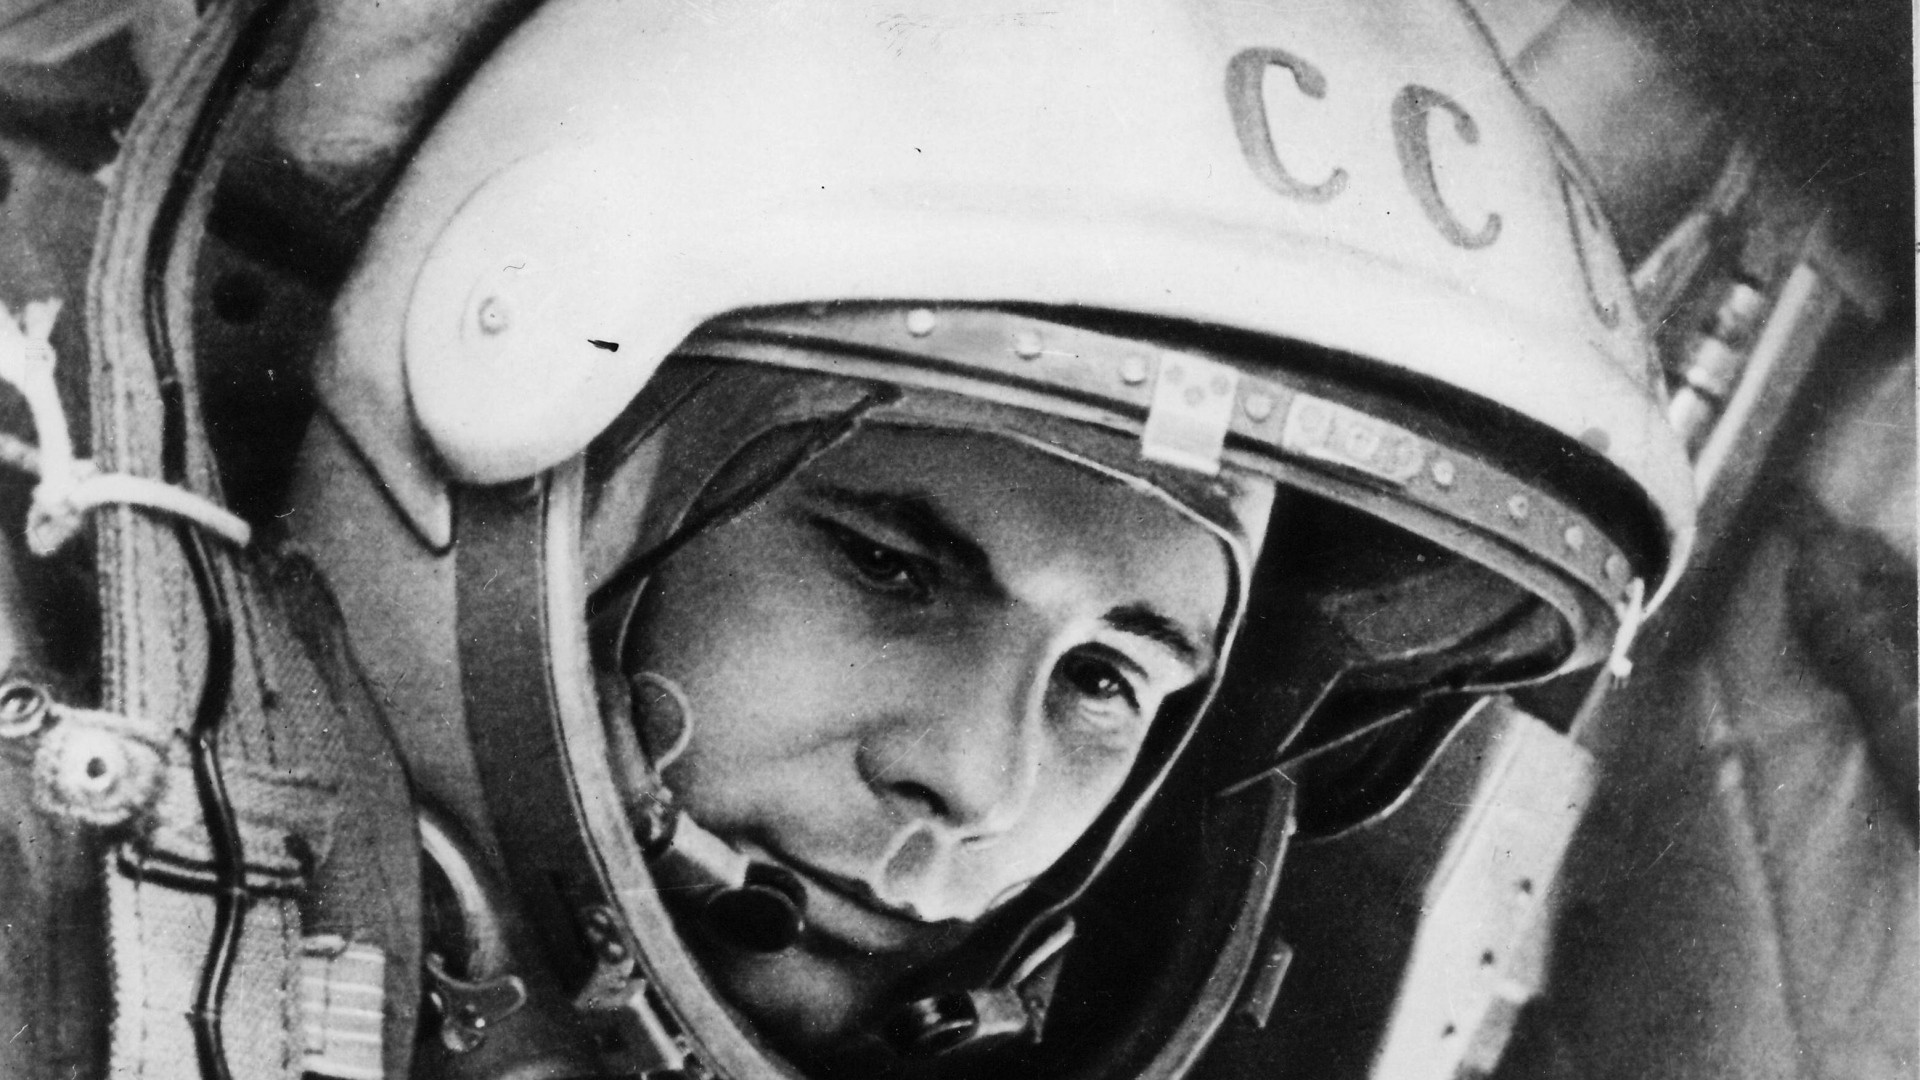 People 1920x1080 Yuri Gagarin astronaut USSR men history vintage monochrome Soviet Space Program spacesuit cropped helmet flight helmet